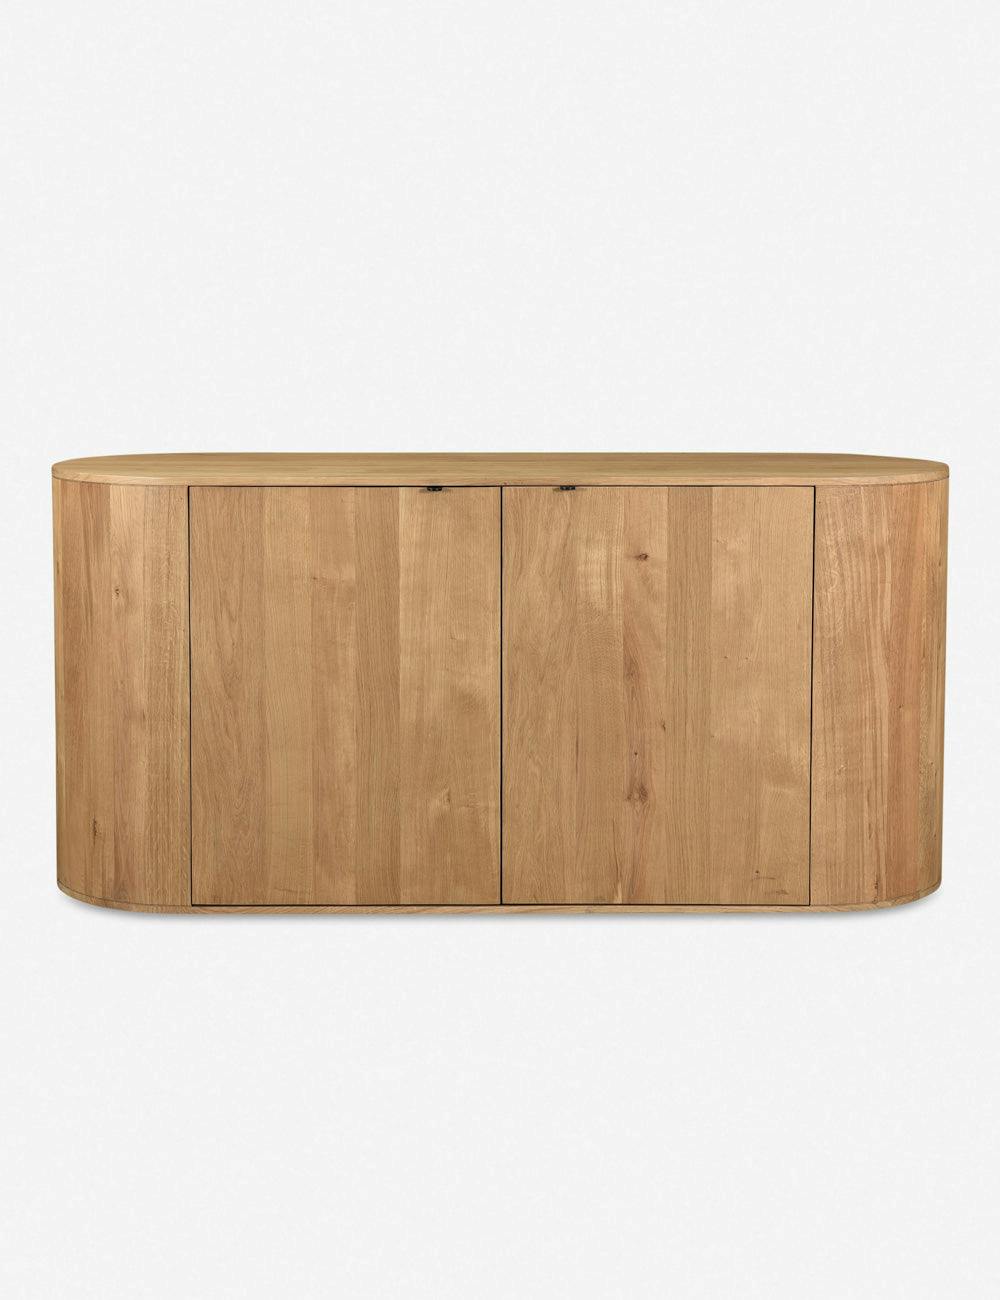 Scandinavian 66'' Natural Brown Oak Wood Sideboard